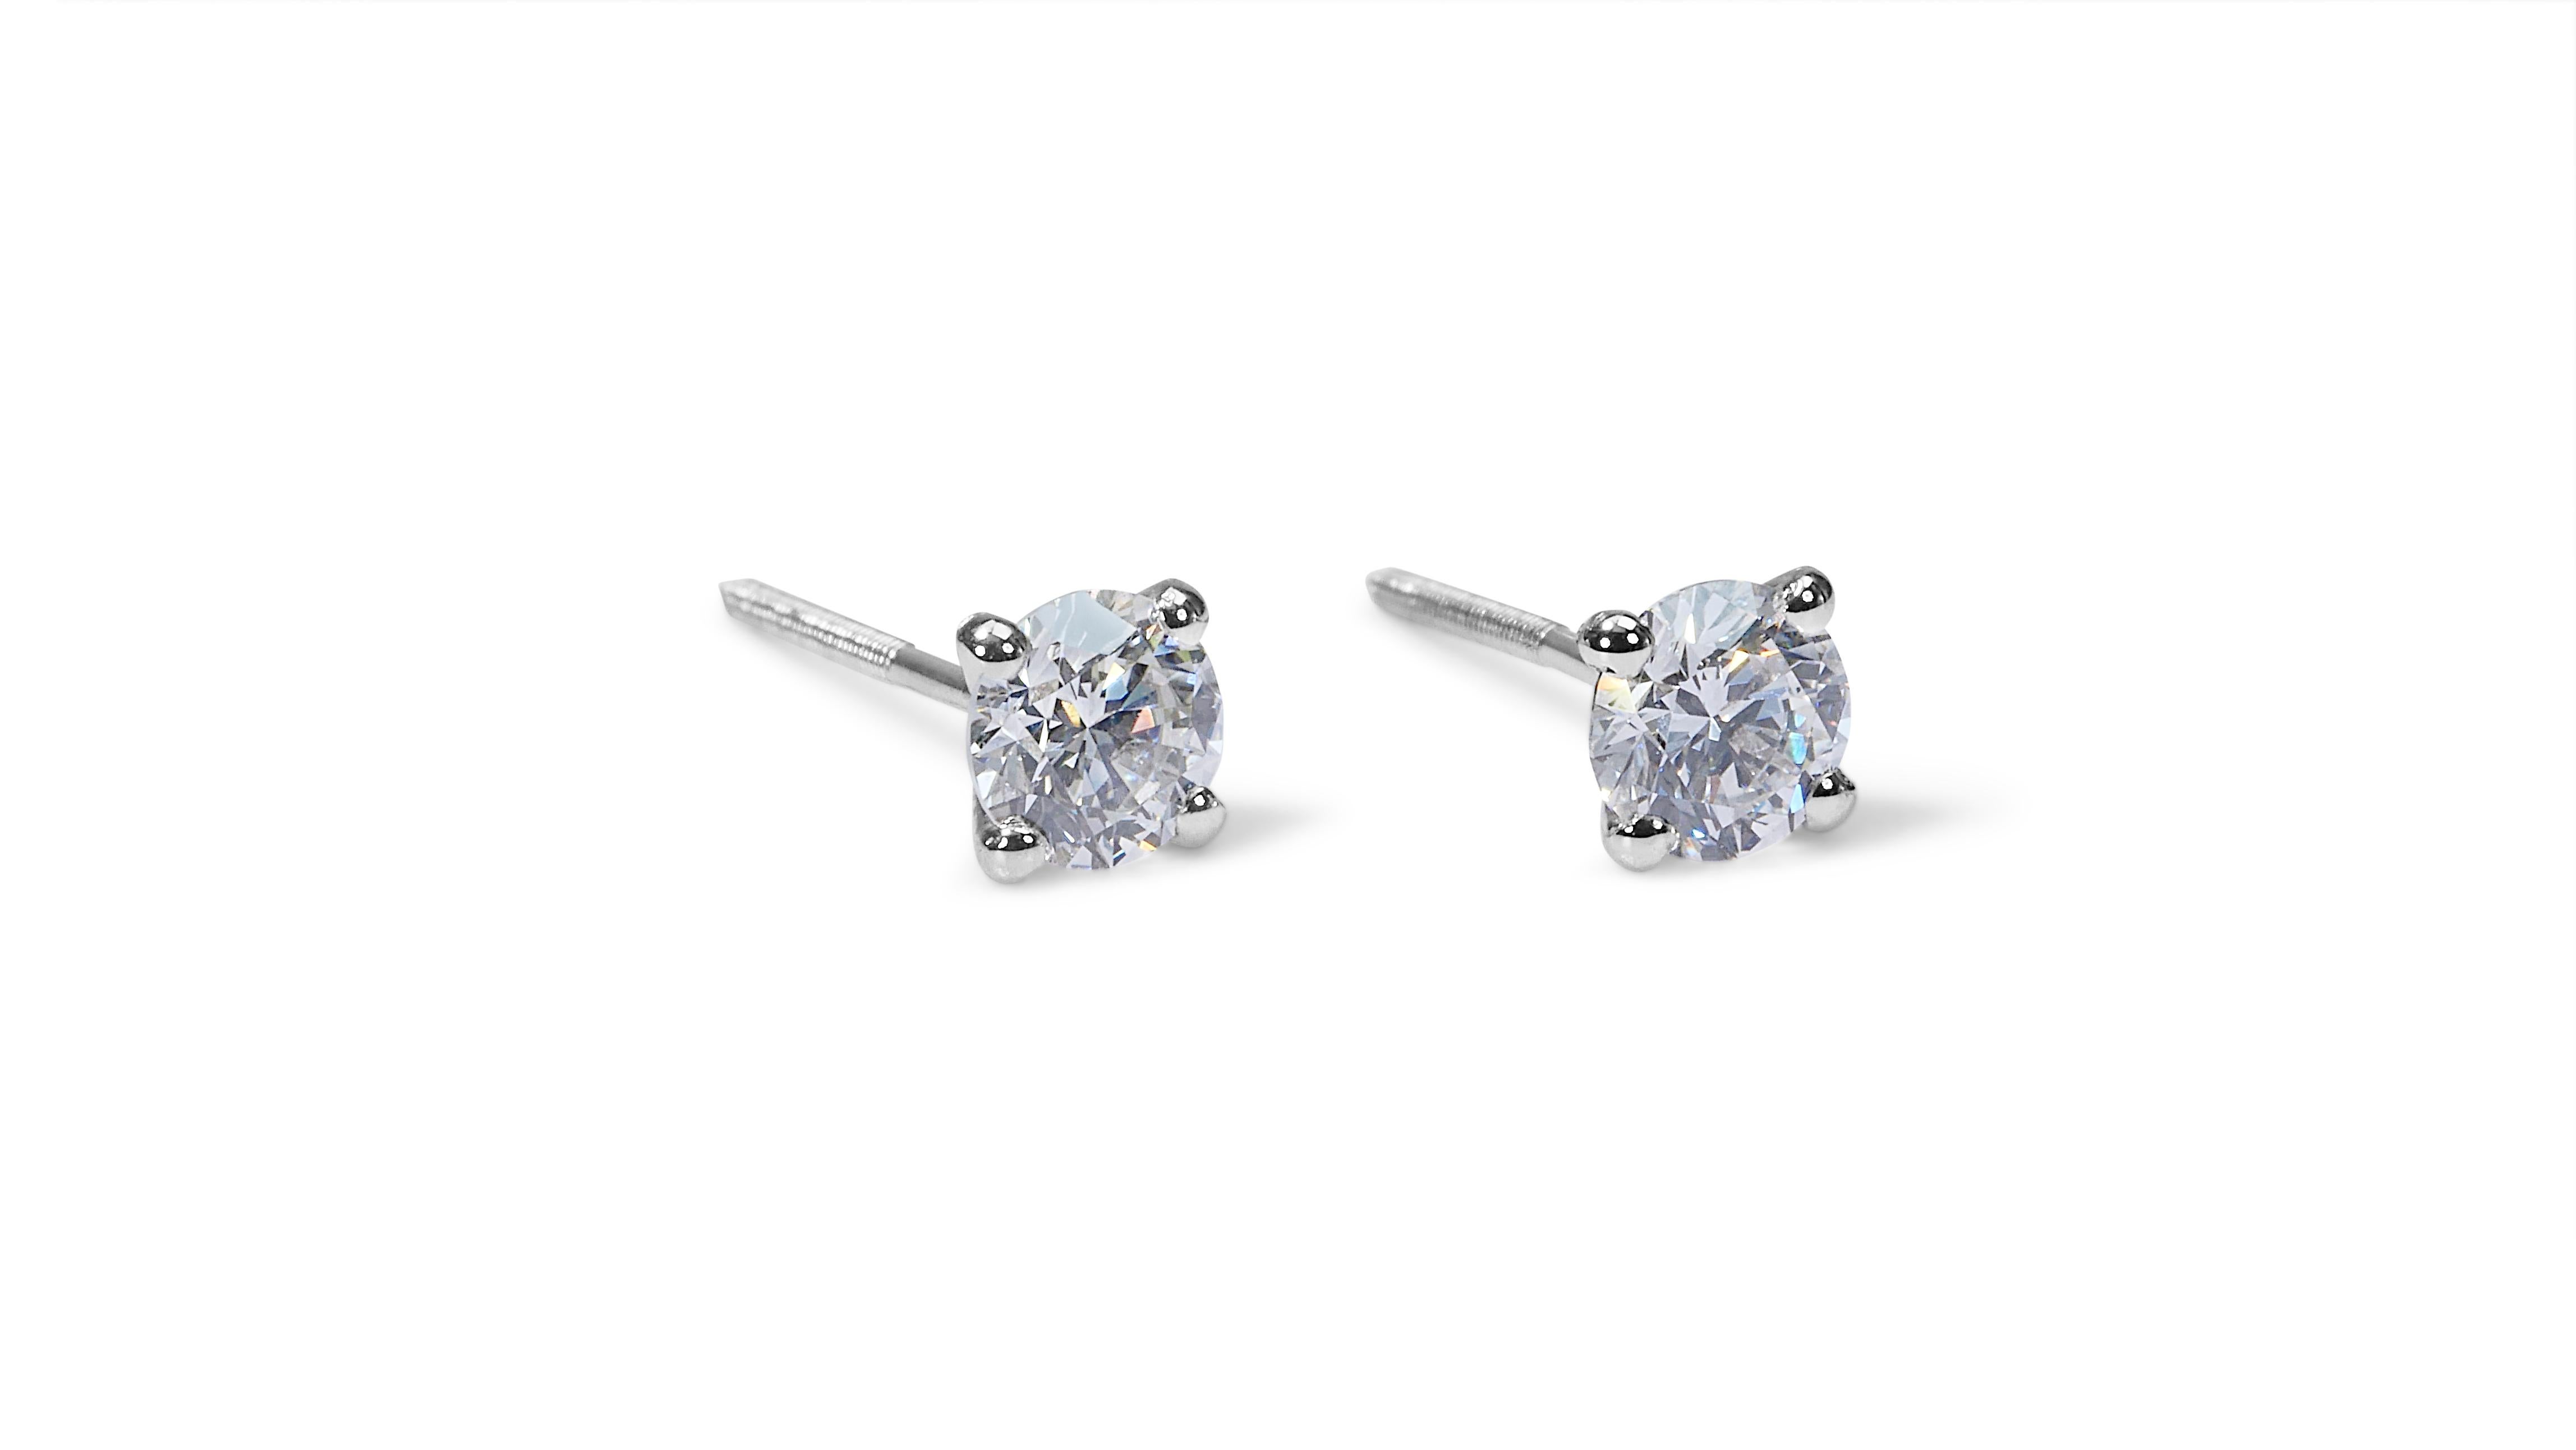 Mesmerizing 2.01ct Diamond Stud Earrings in 18k White Gold - GIA Certified  For Sale 2